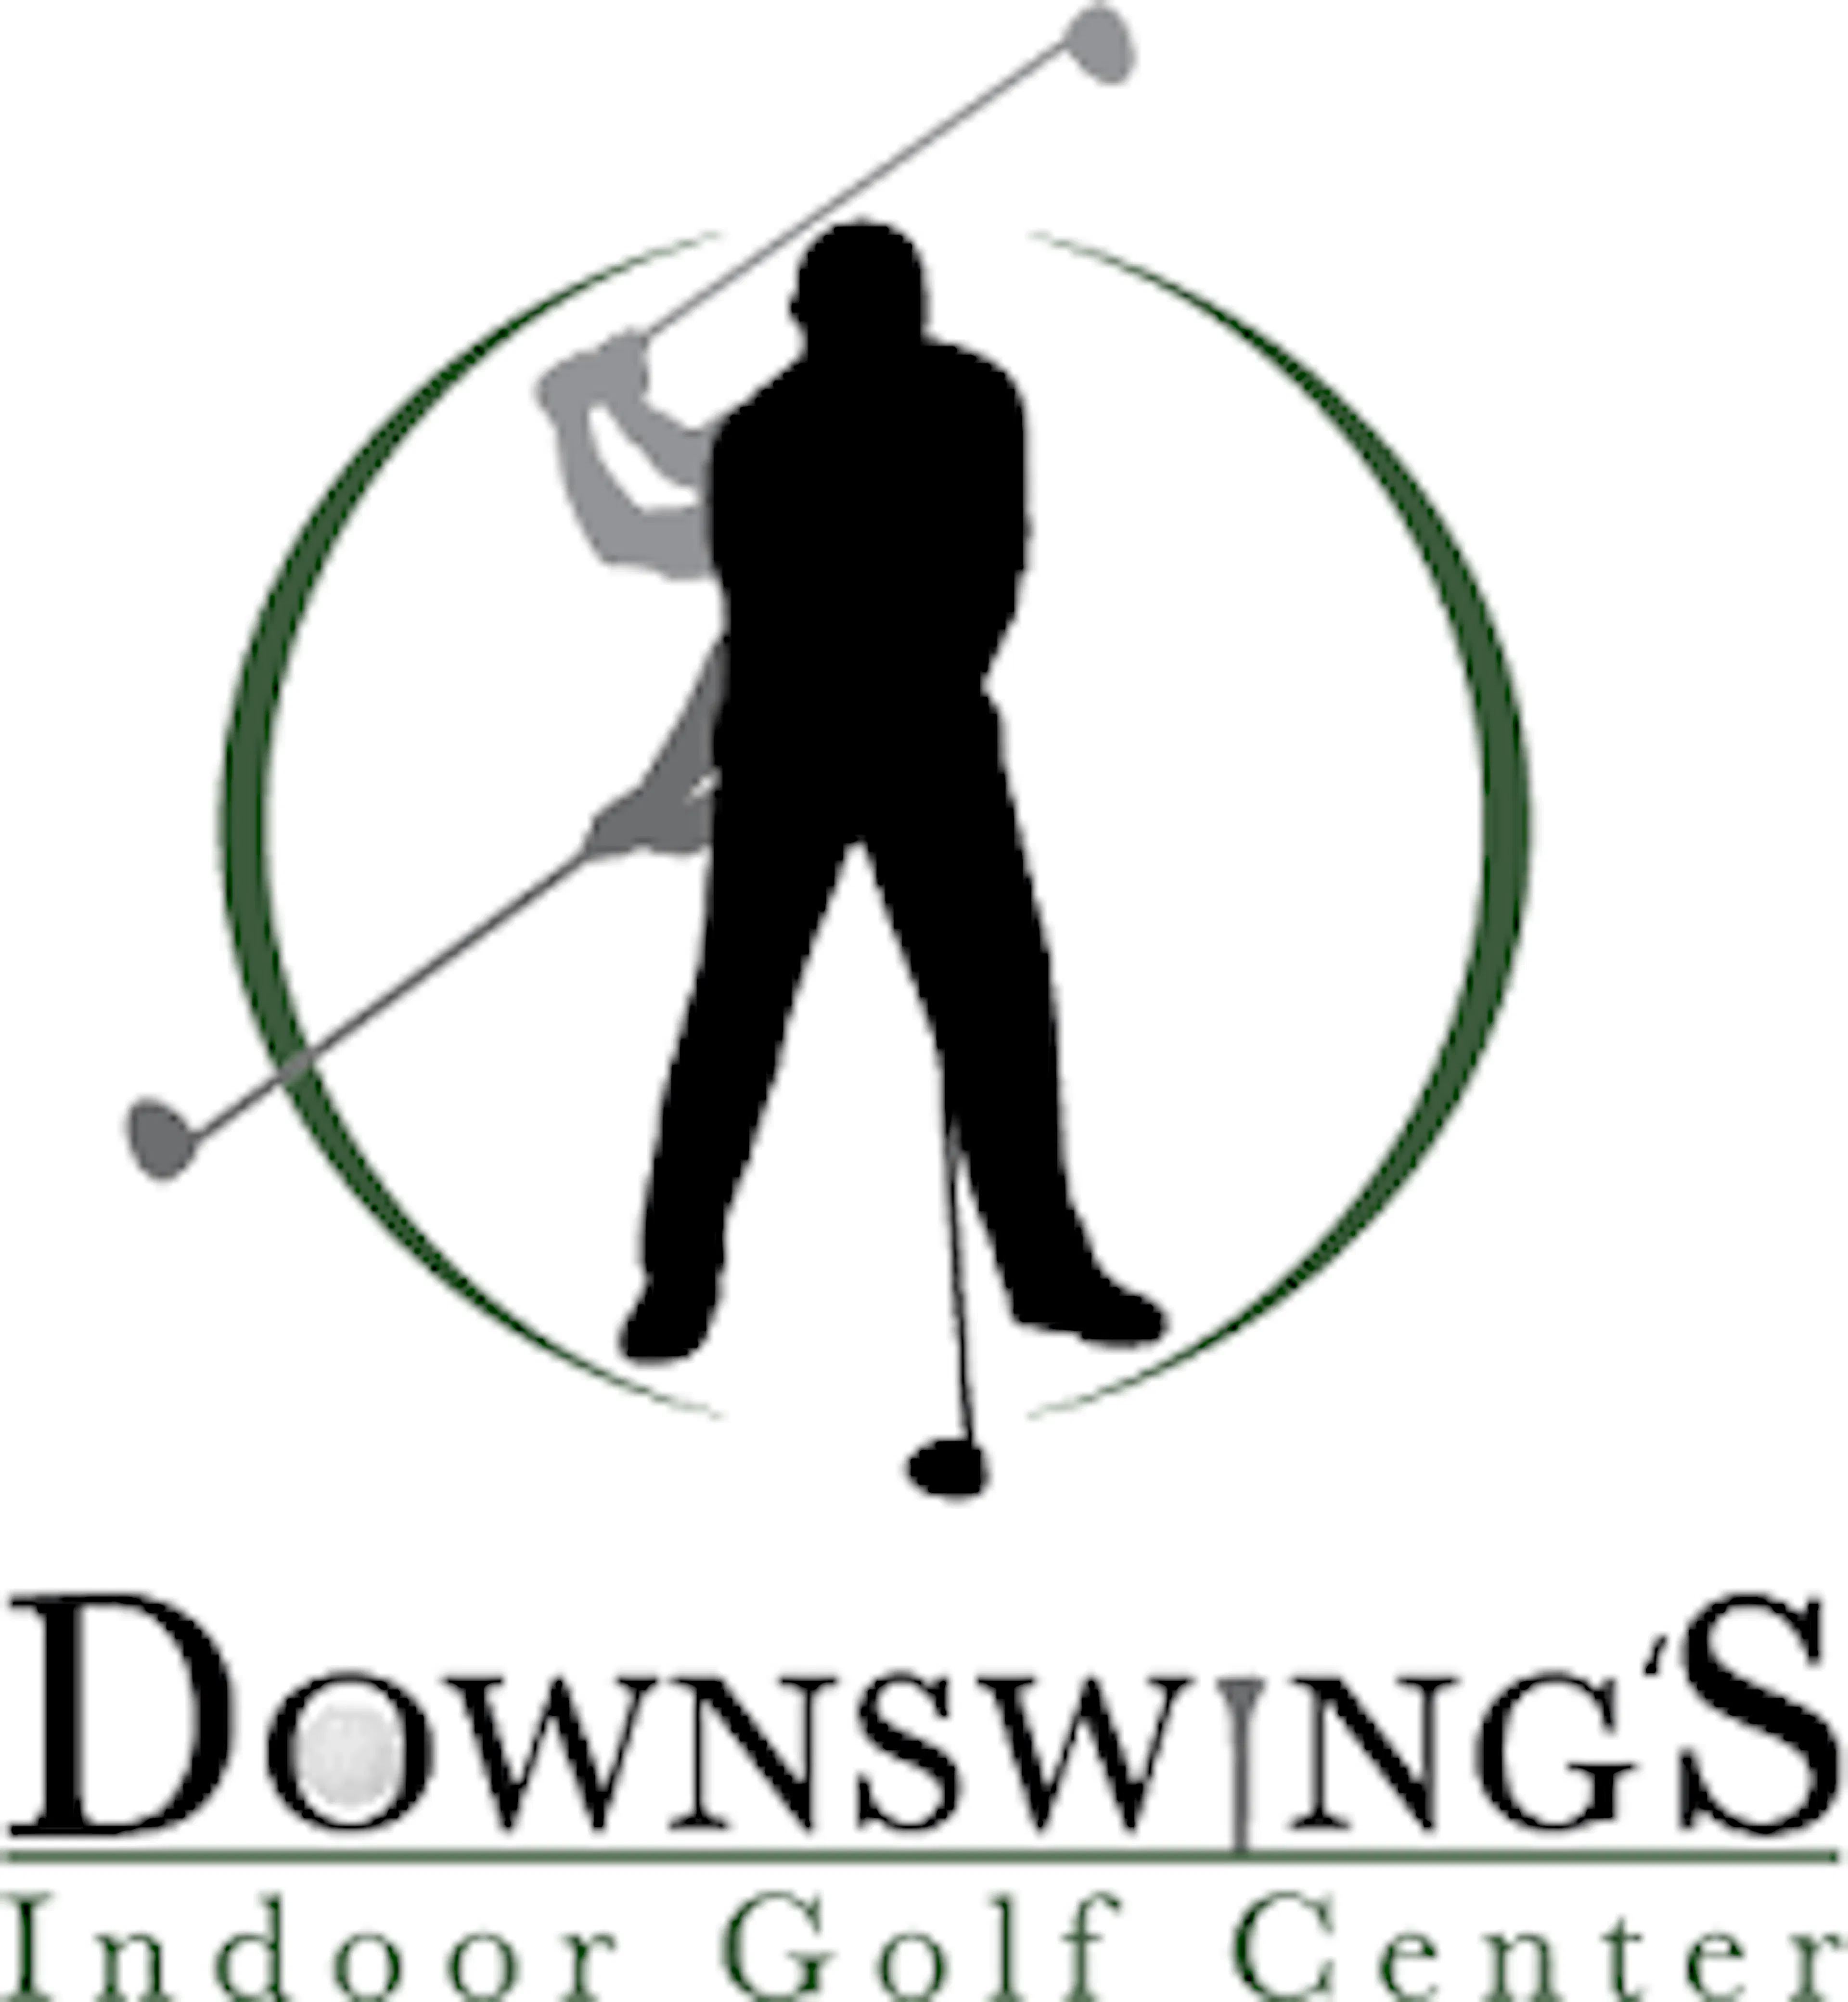 downswing's indoor golf center